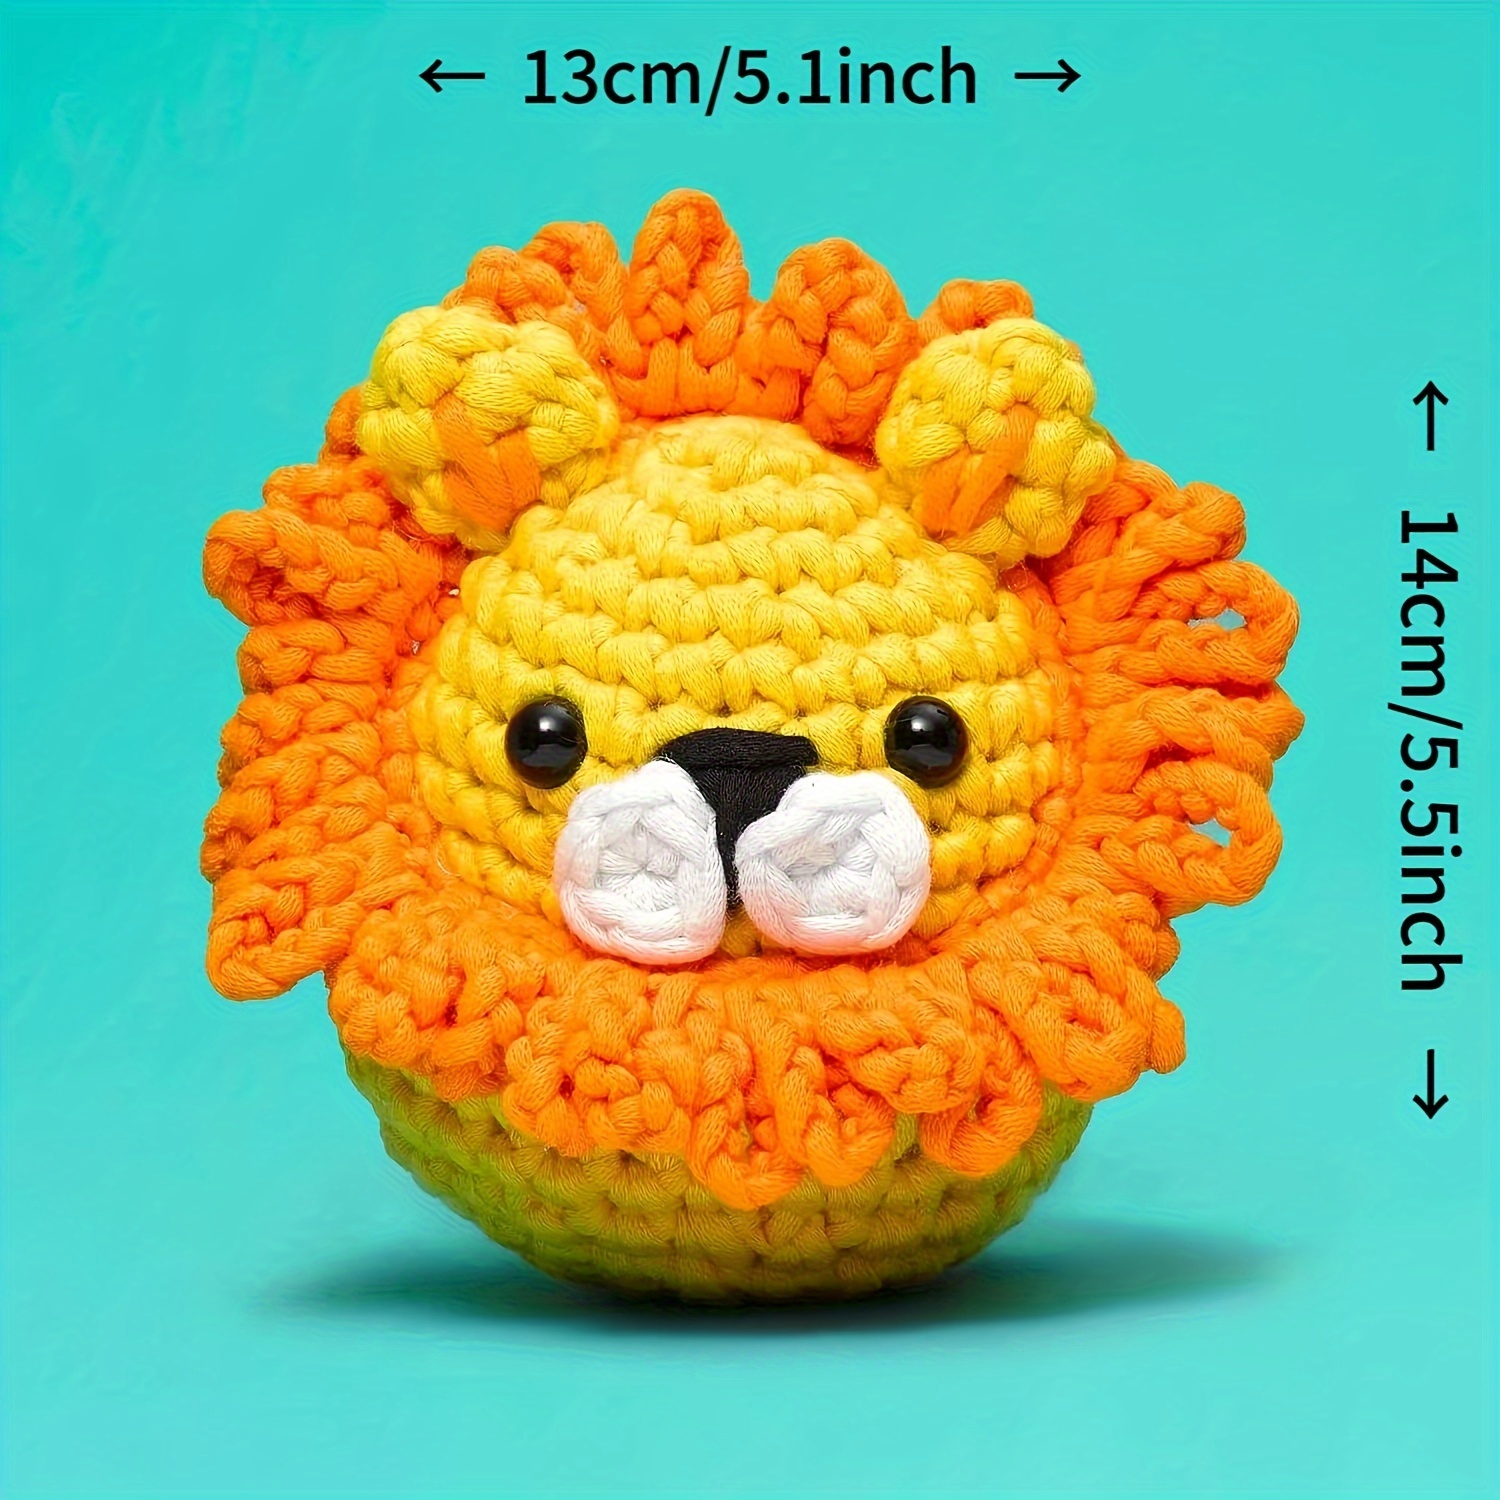 1set Kit Crochet Principiantes Hilo Fácil Fácil Kit Crochet - Temu Chile